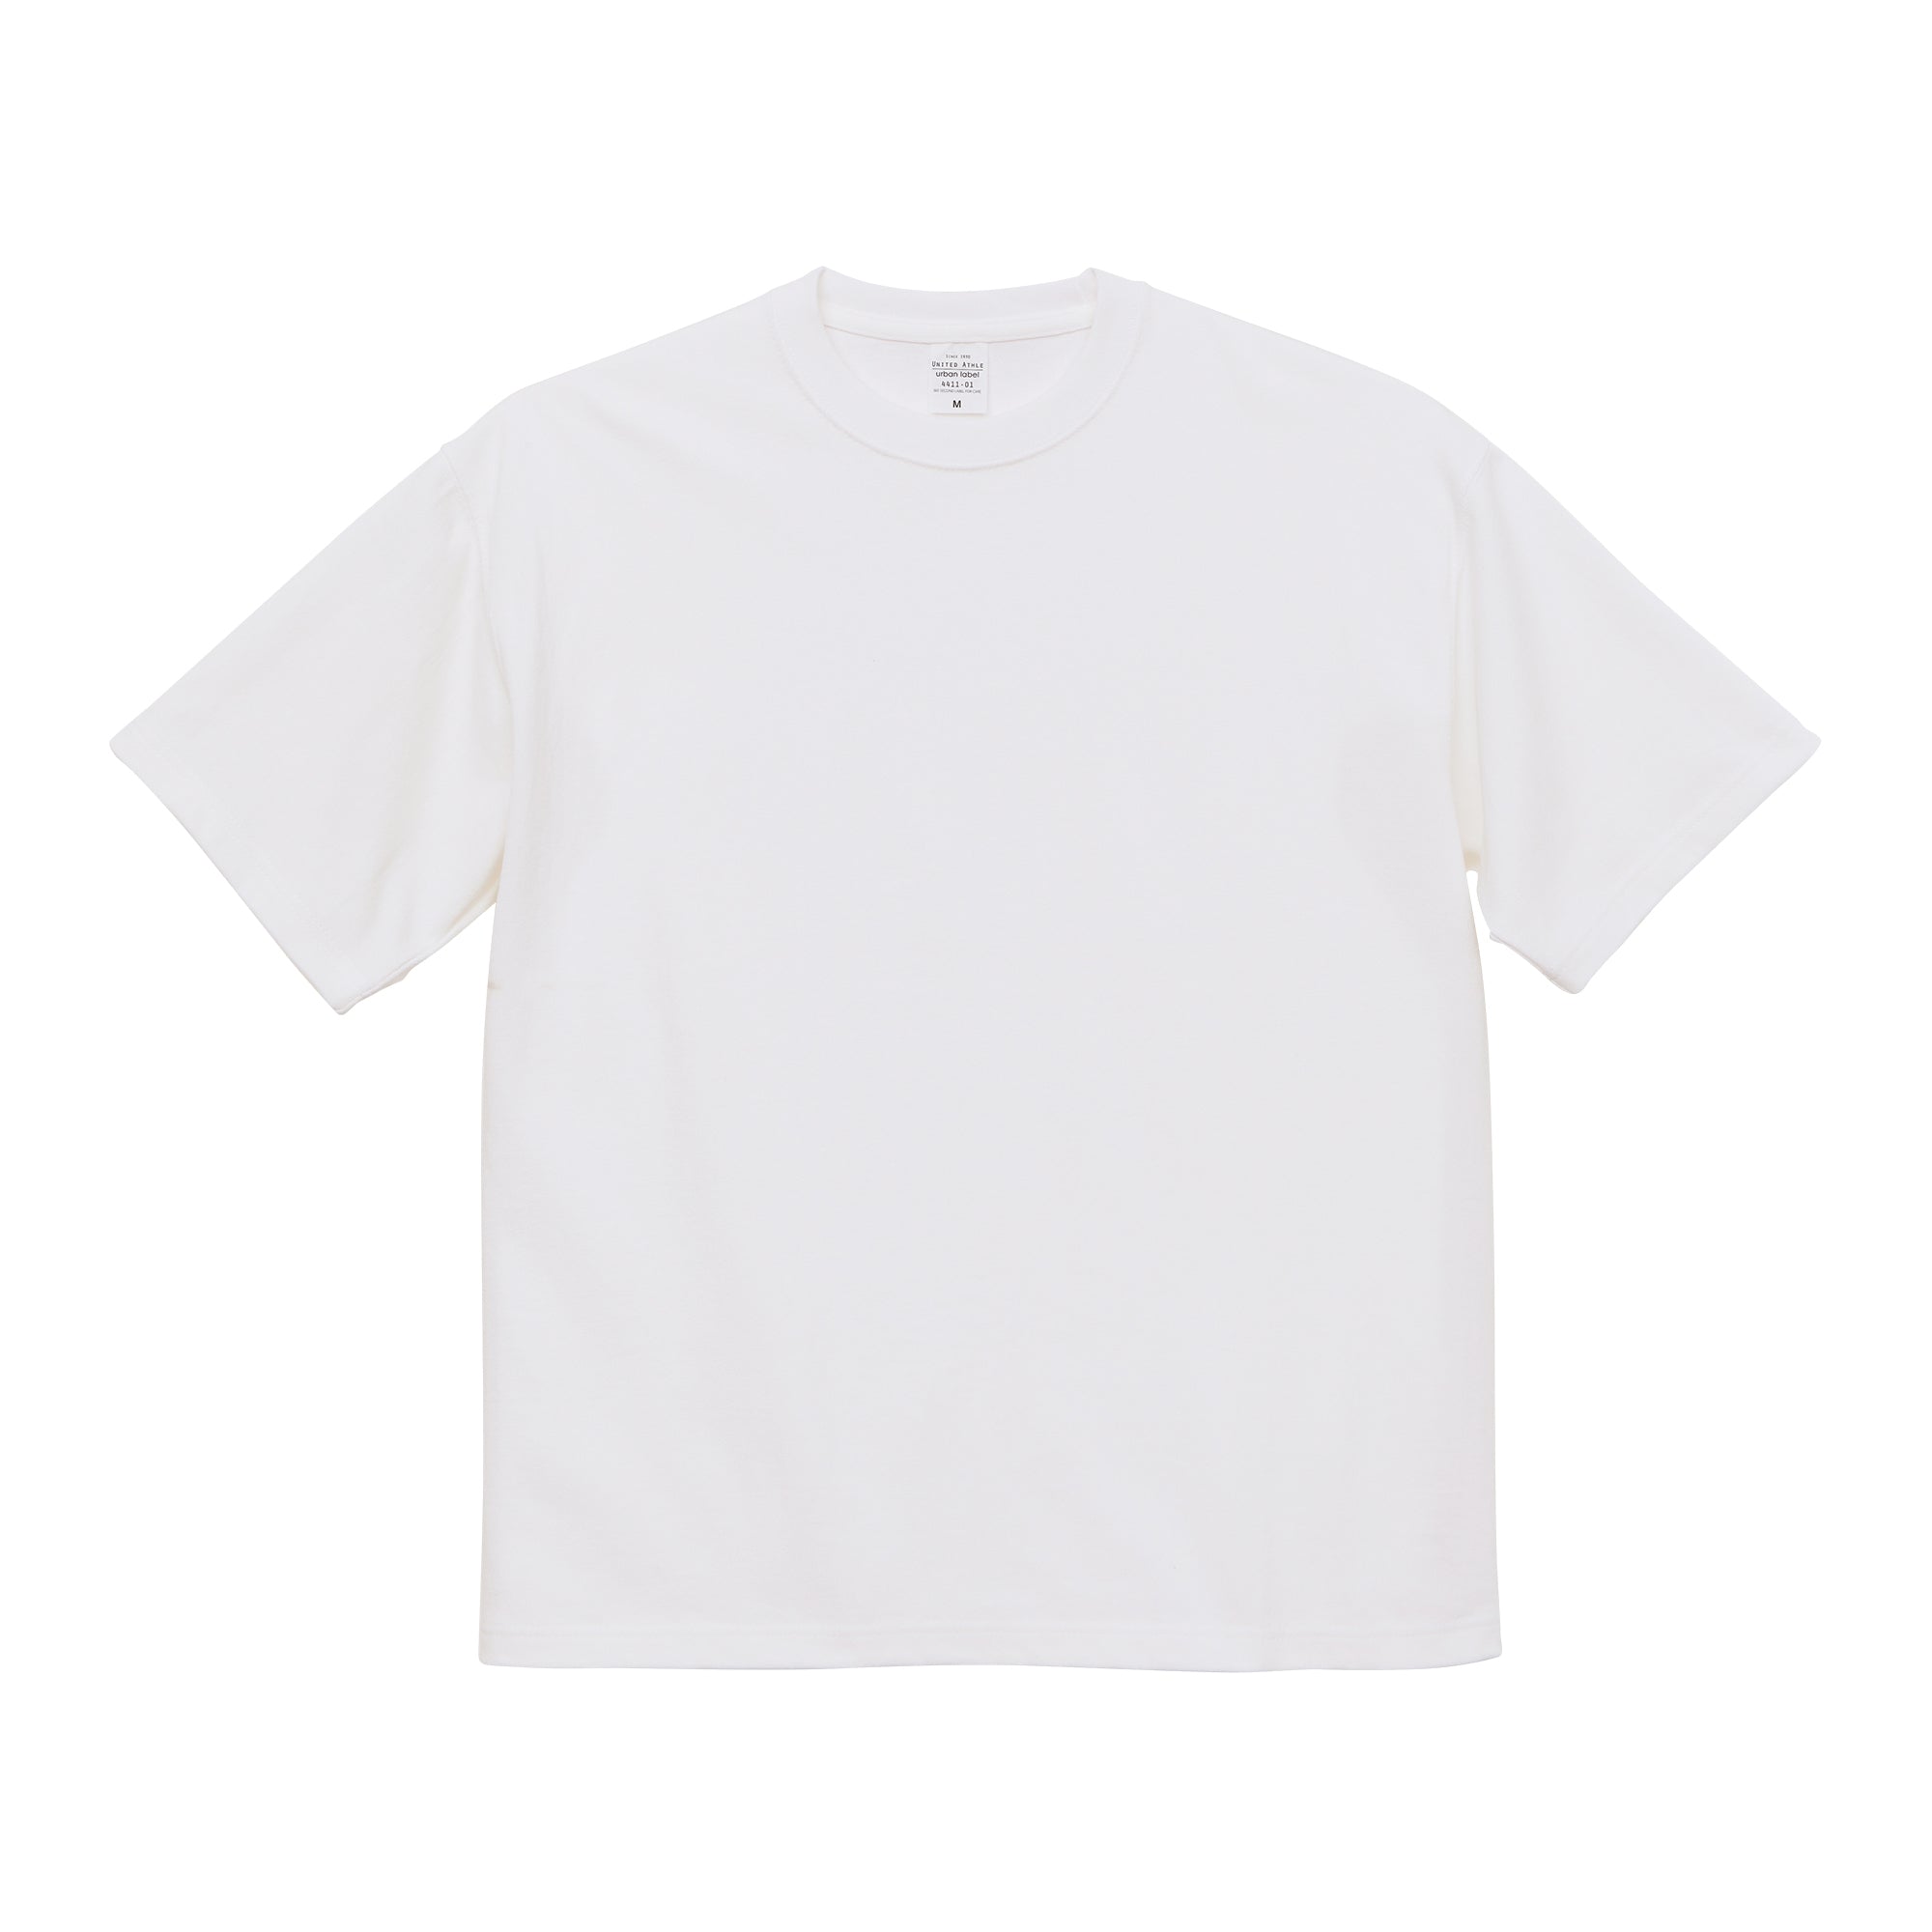 4411 - 9.1oz Magnum Weight Big Silhouette T-shirt - White x 1